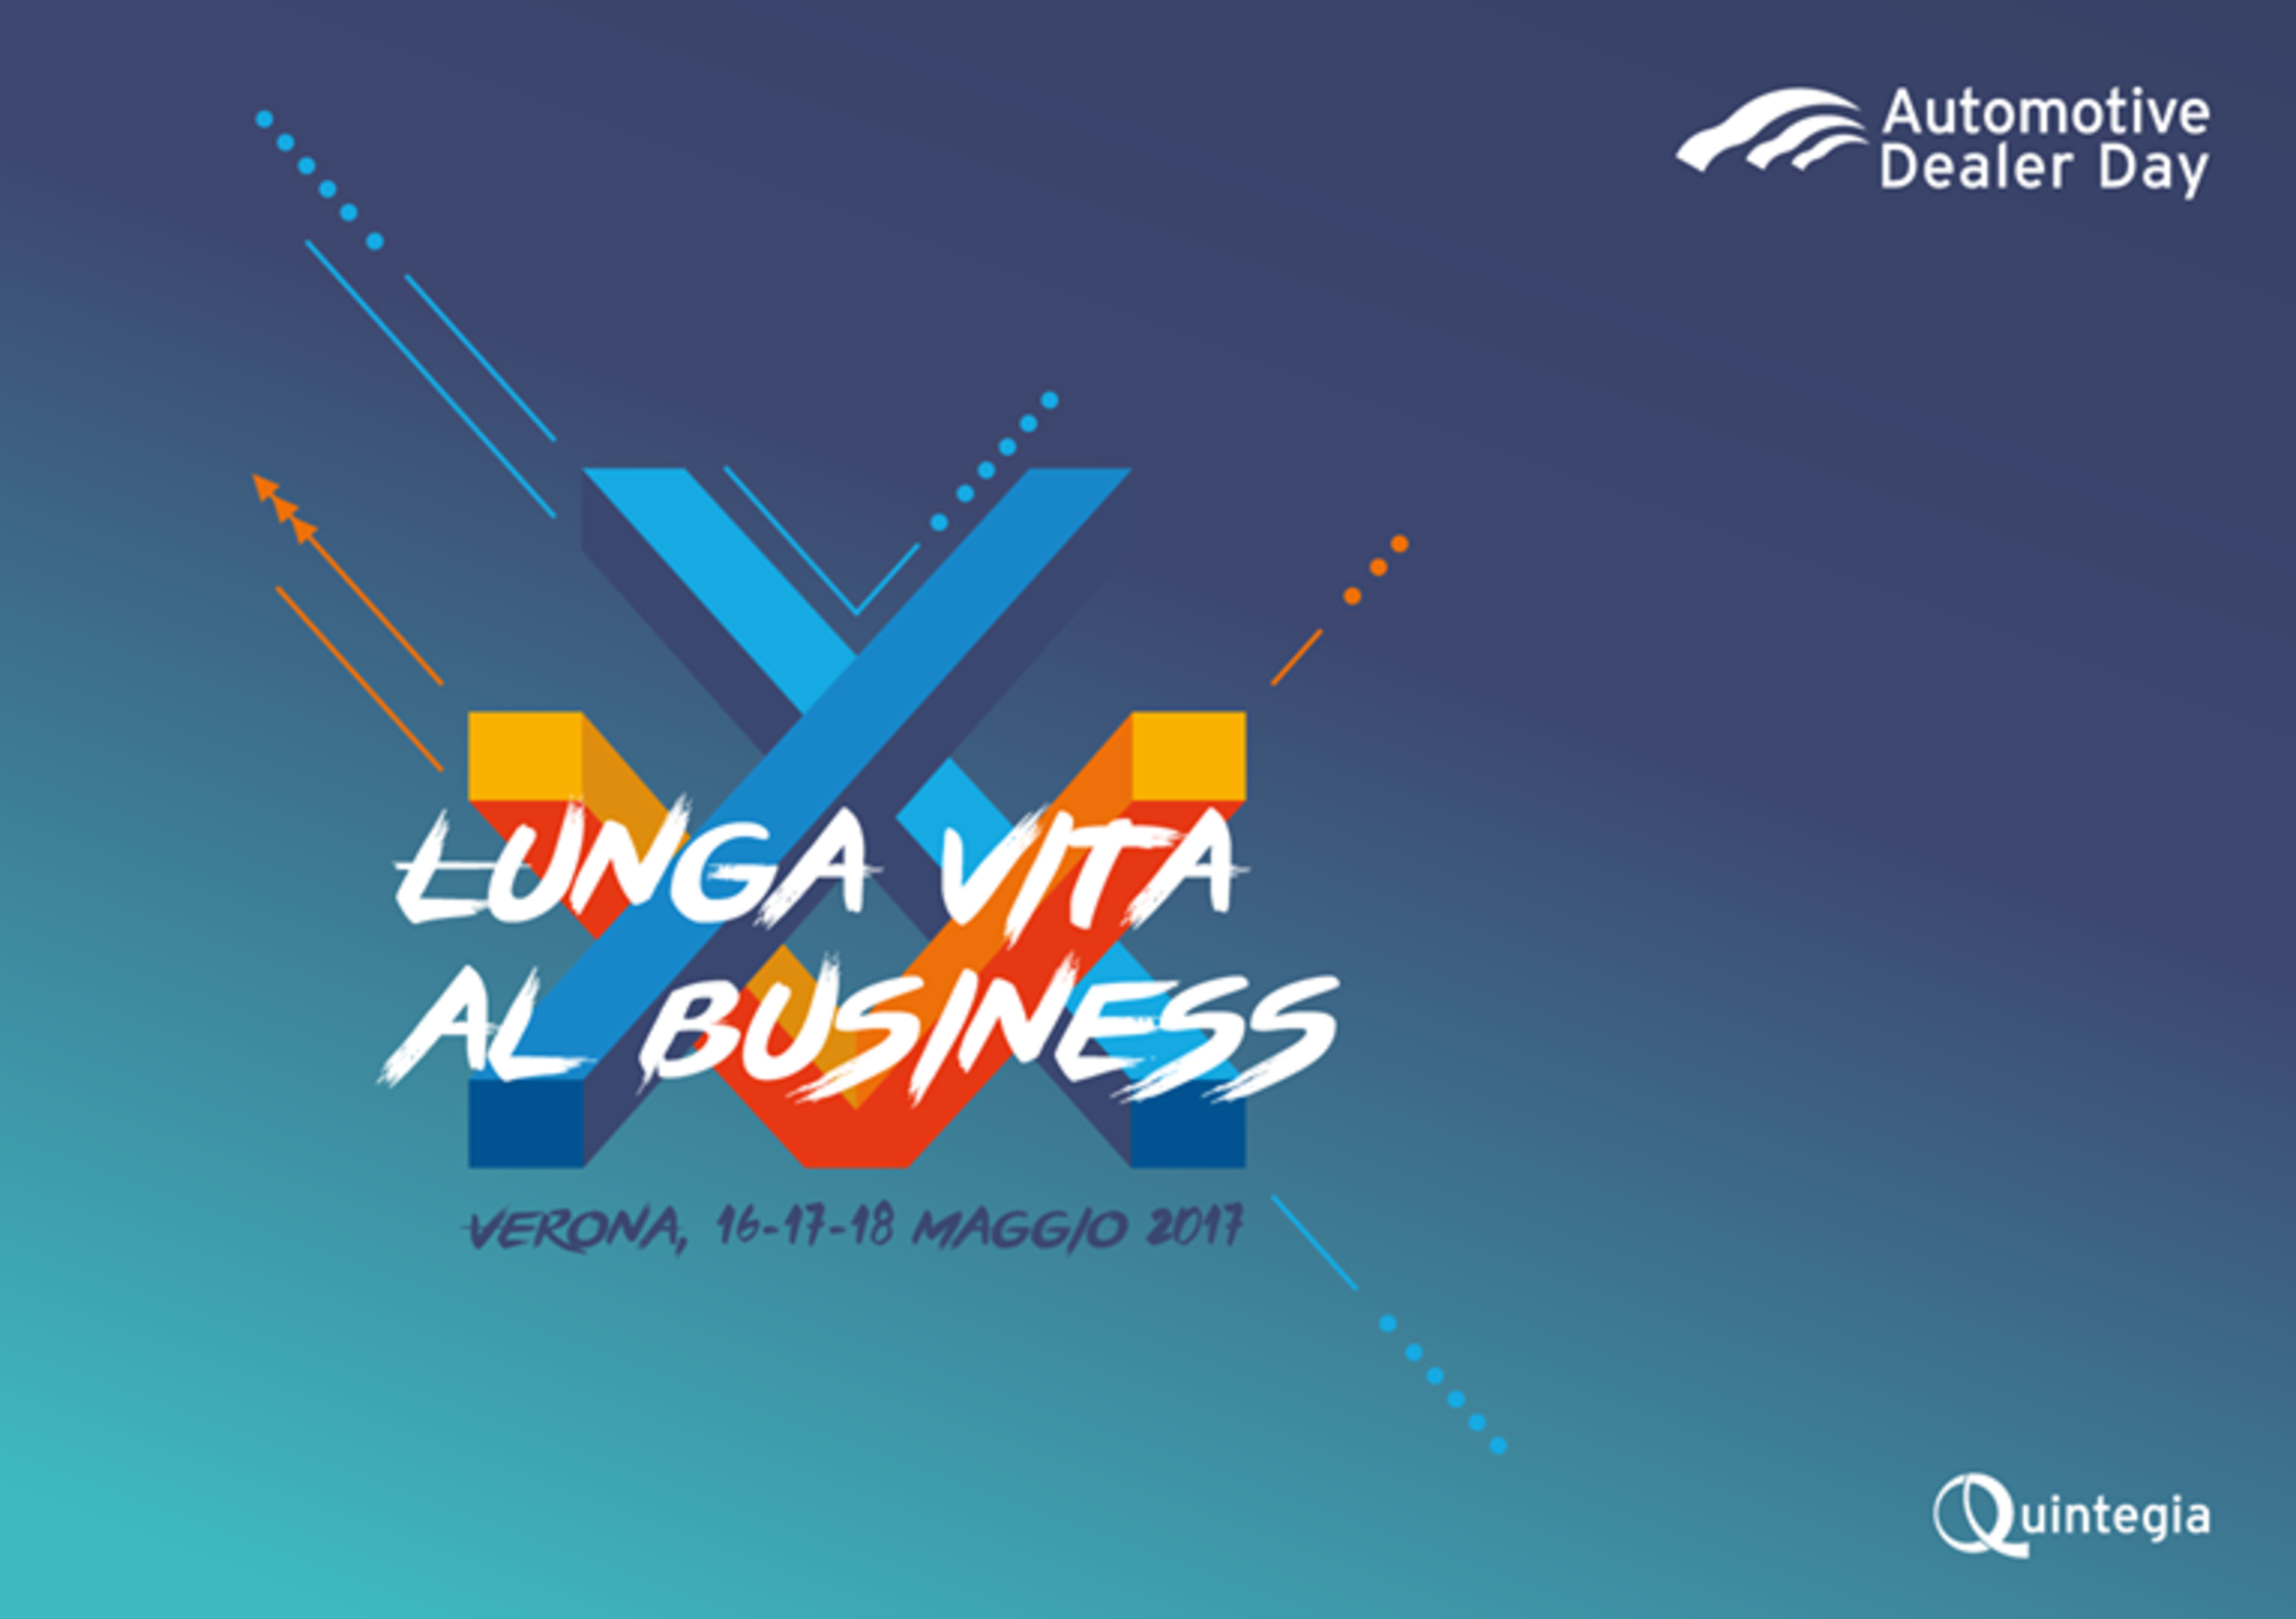 Automotive Dealer Day XV: a Verona dal 16 al 18 maggio 2017